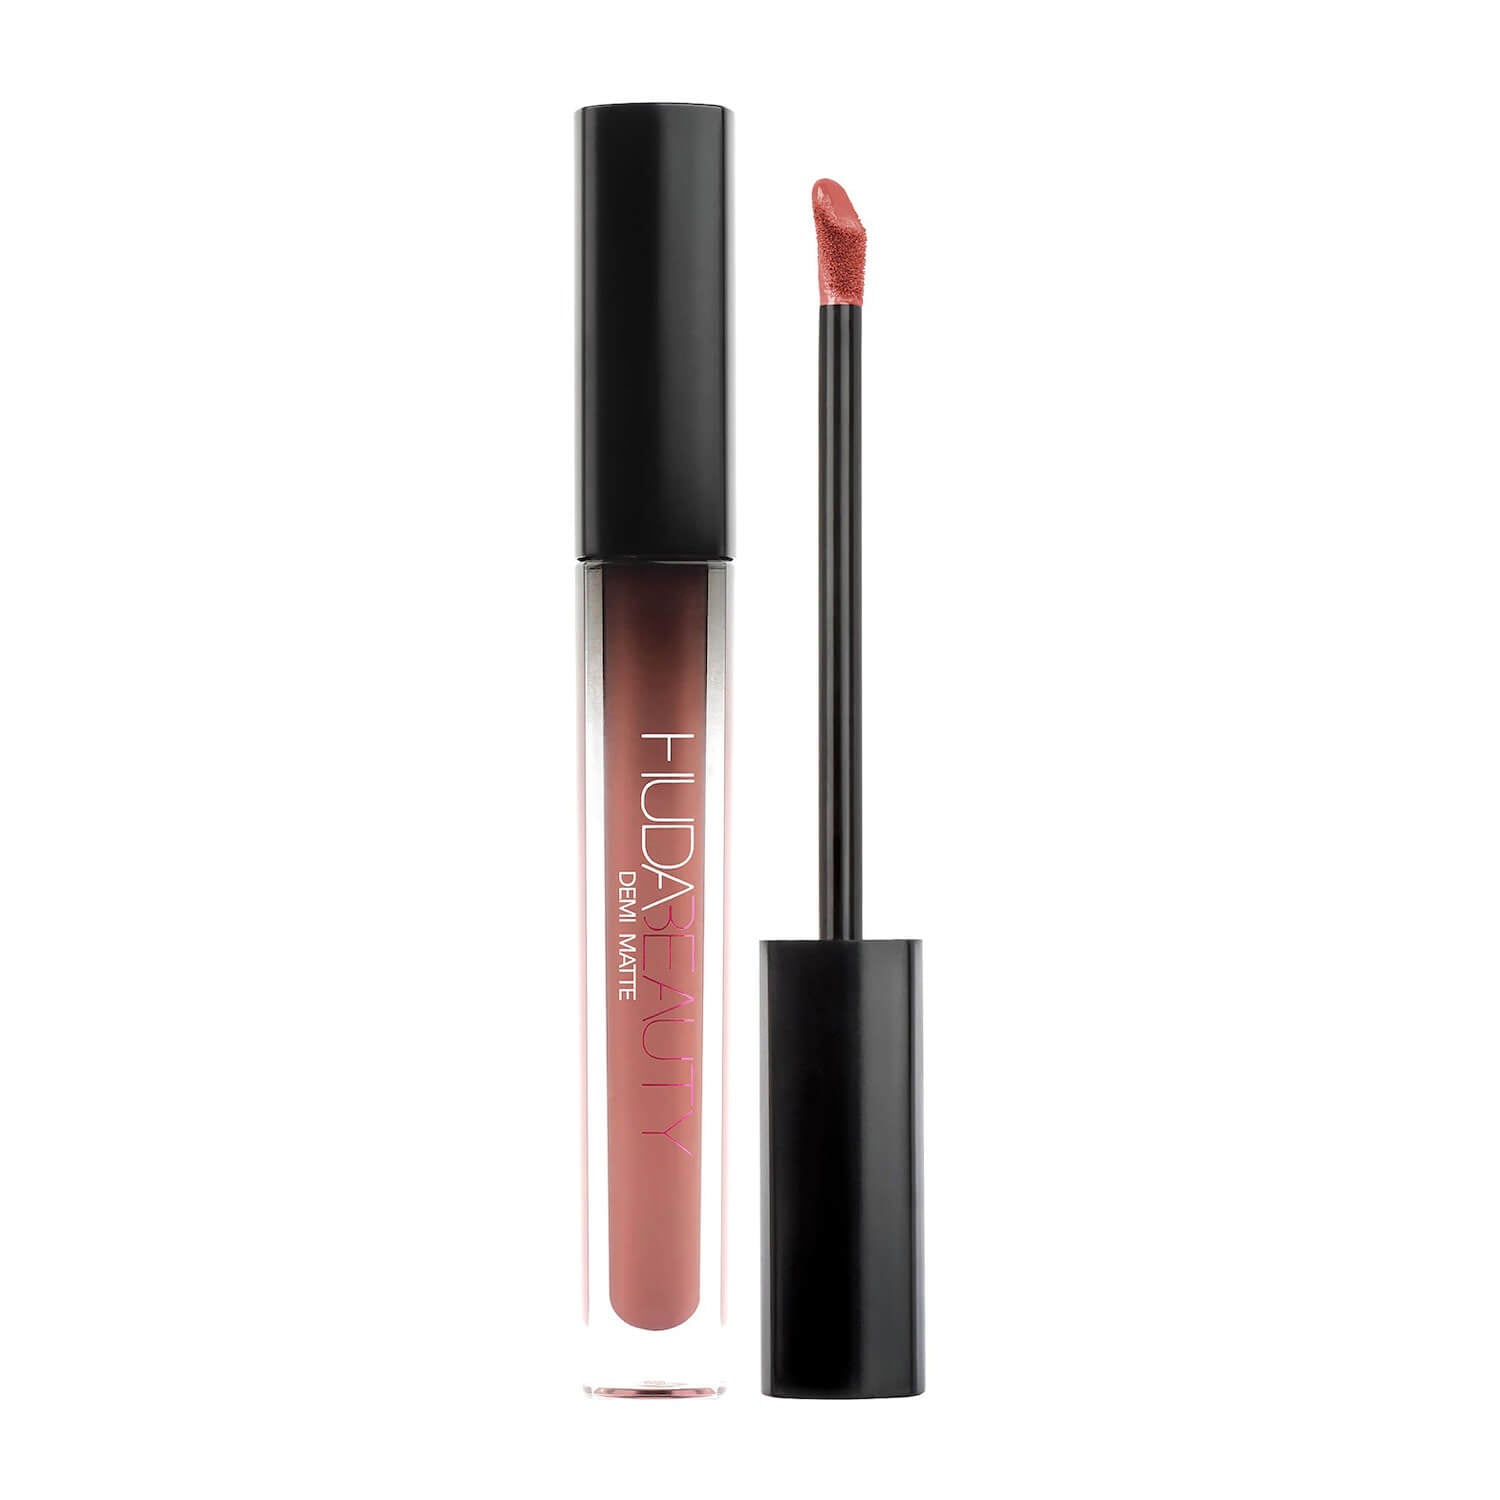 Buy Huda Beauty Demi Matte Liquid Lipstick - Flirt in Pakistan